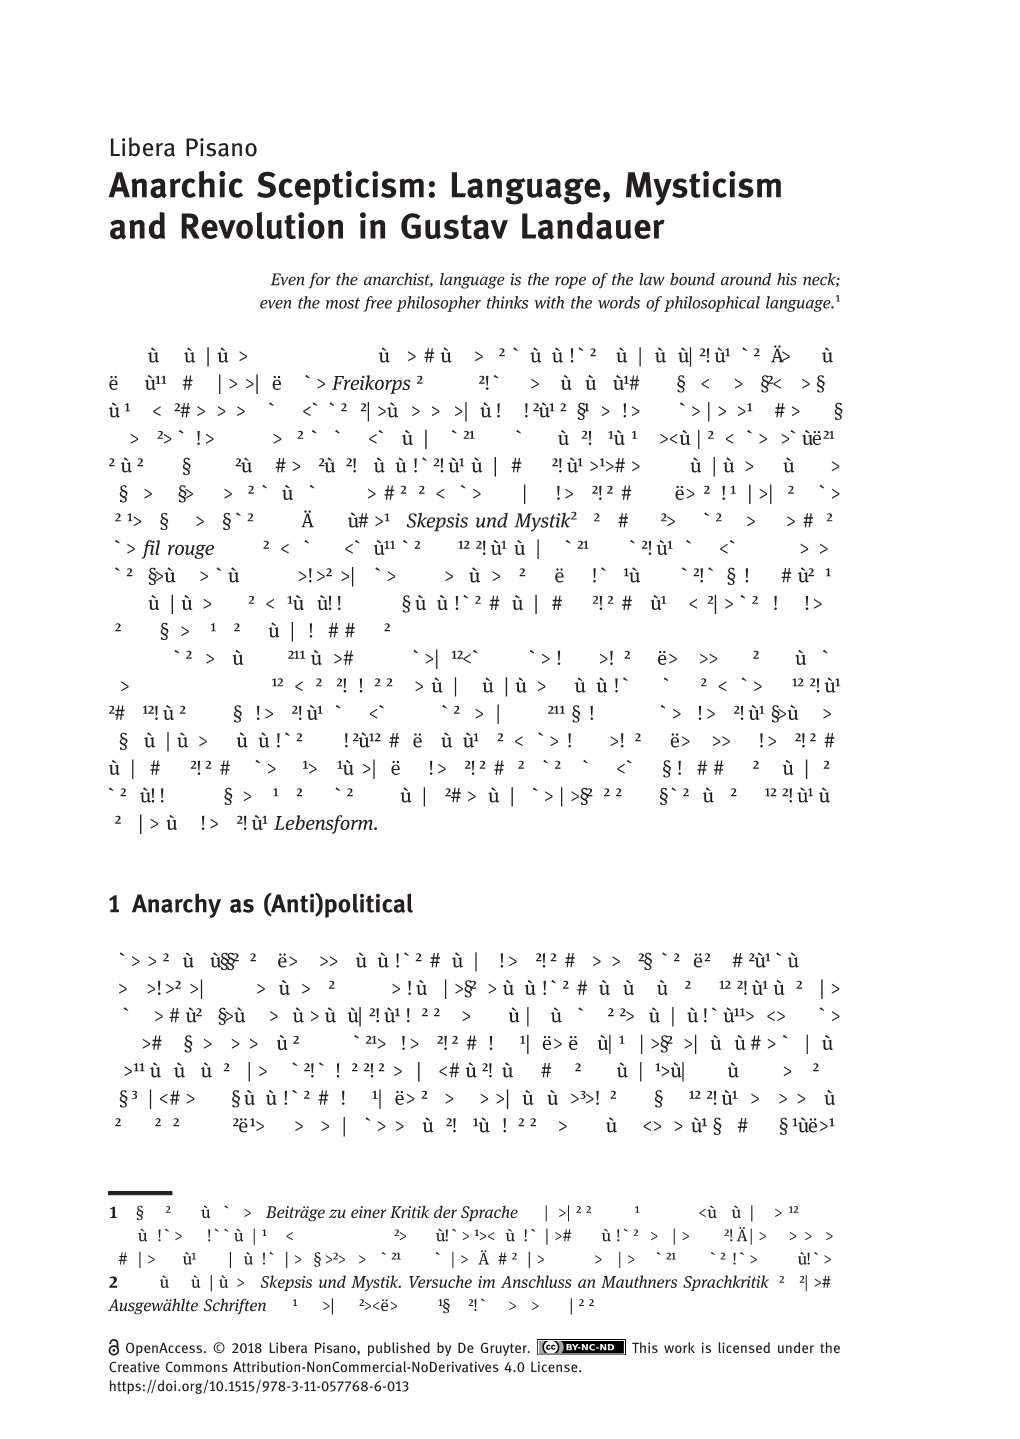 Language, Mysticism and Revolution in Gustav Landauer